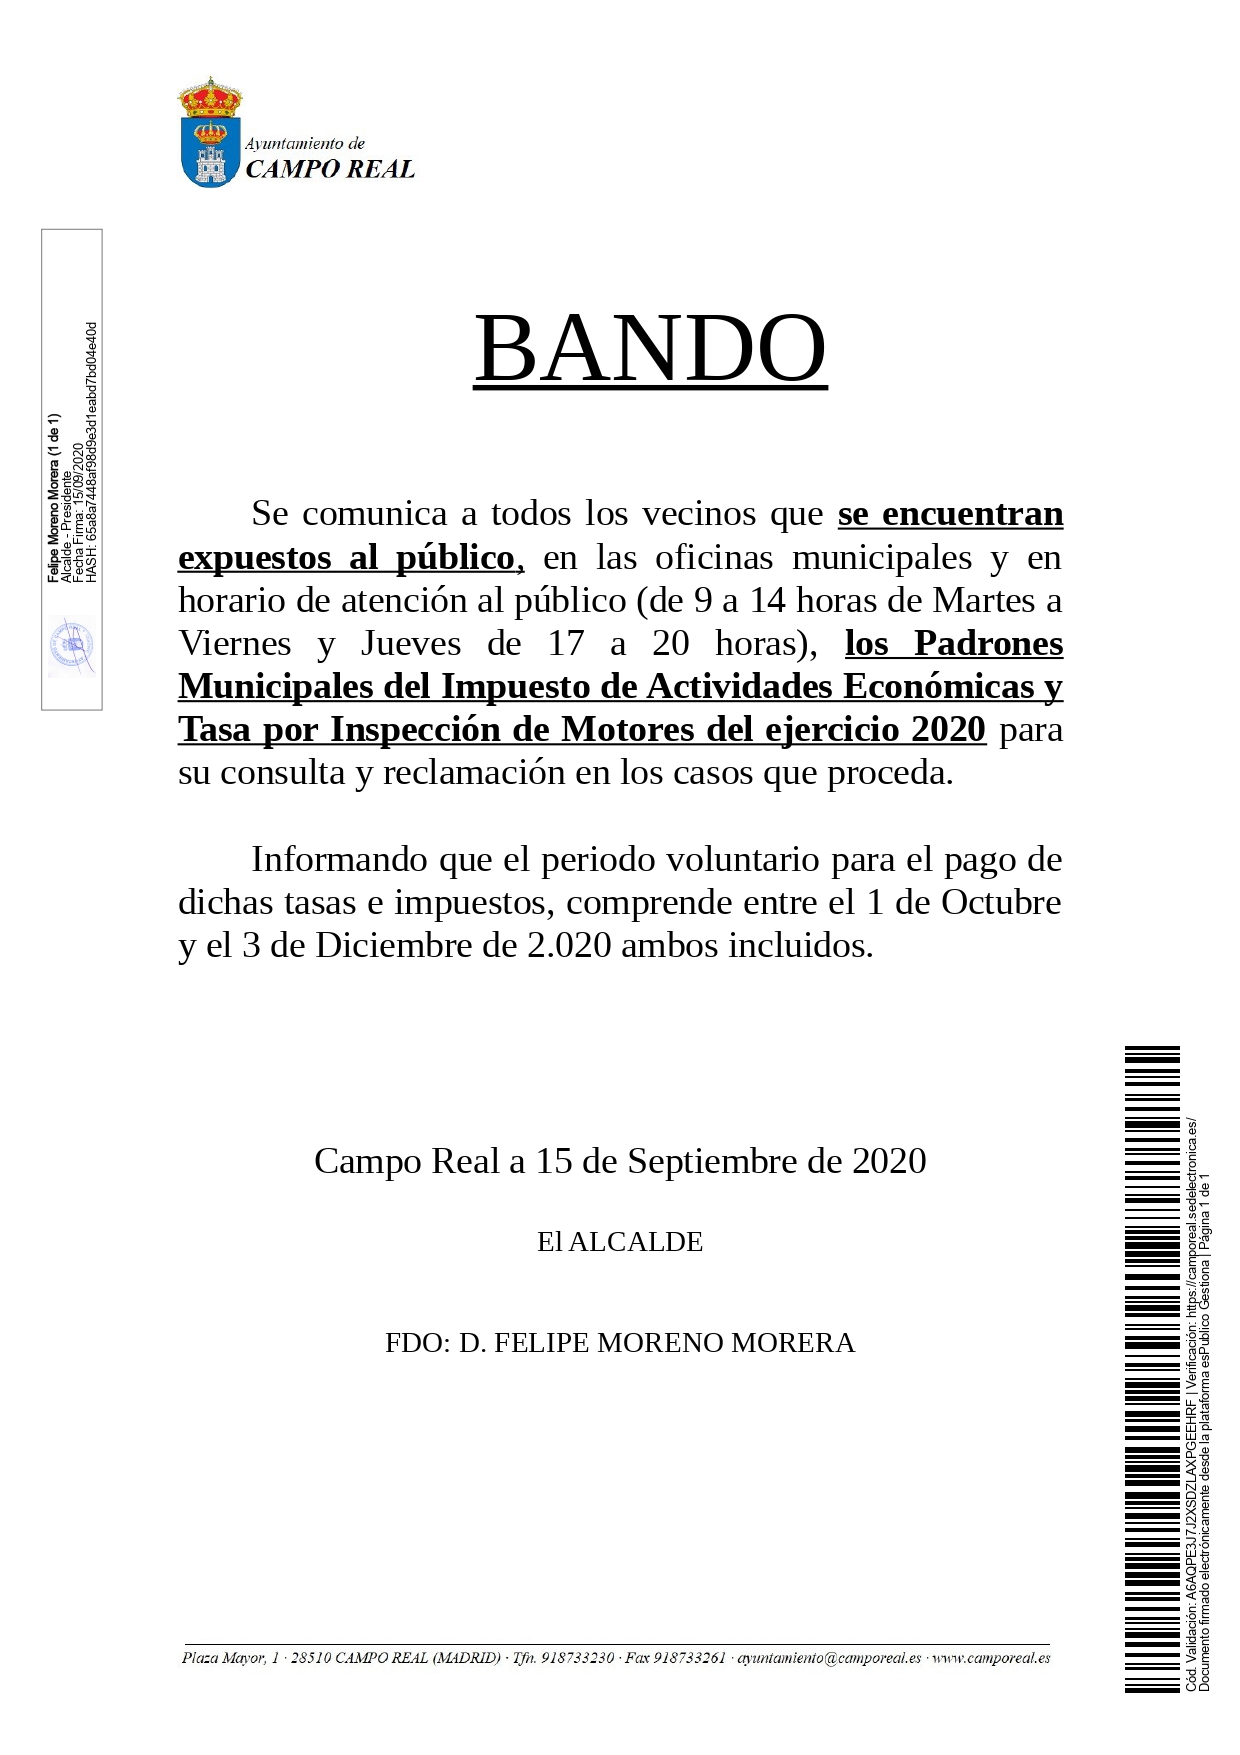 20200915_Comunicación_BANDO_page-0001.jpg - 459.37 kB